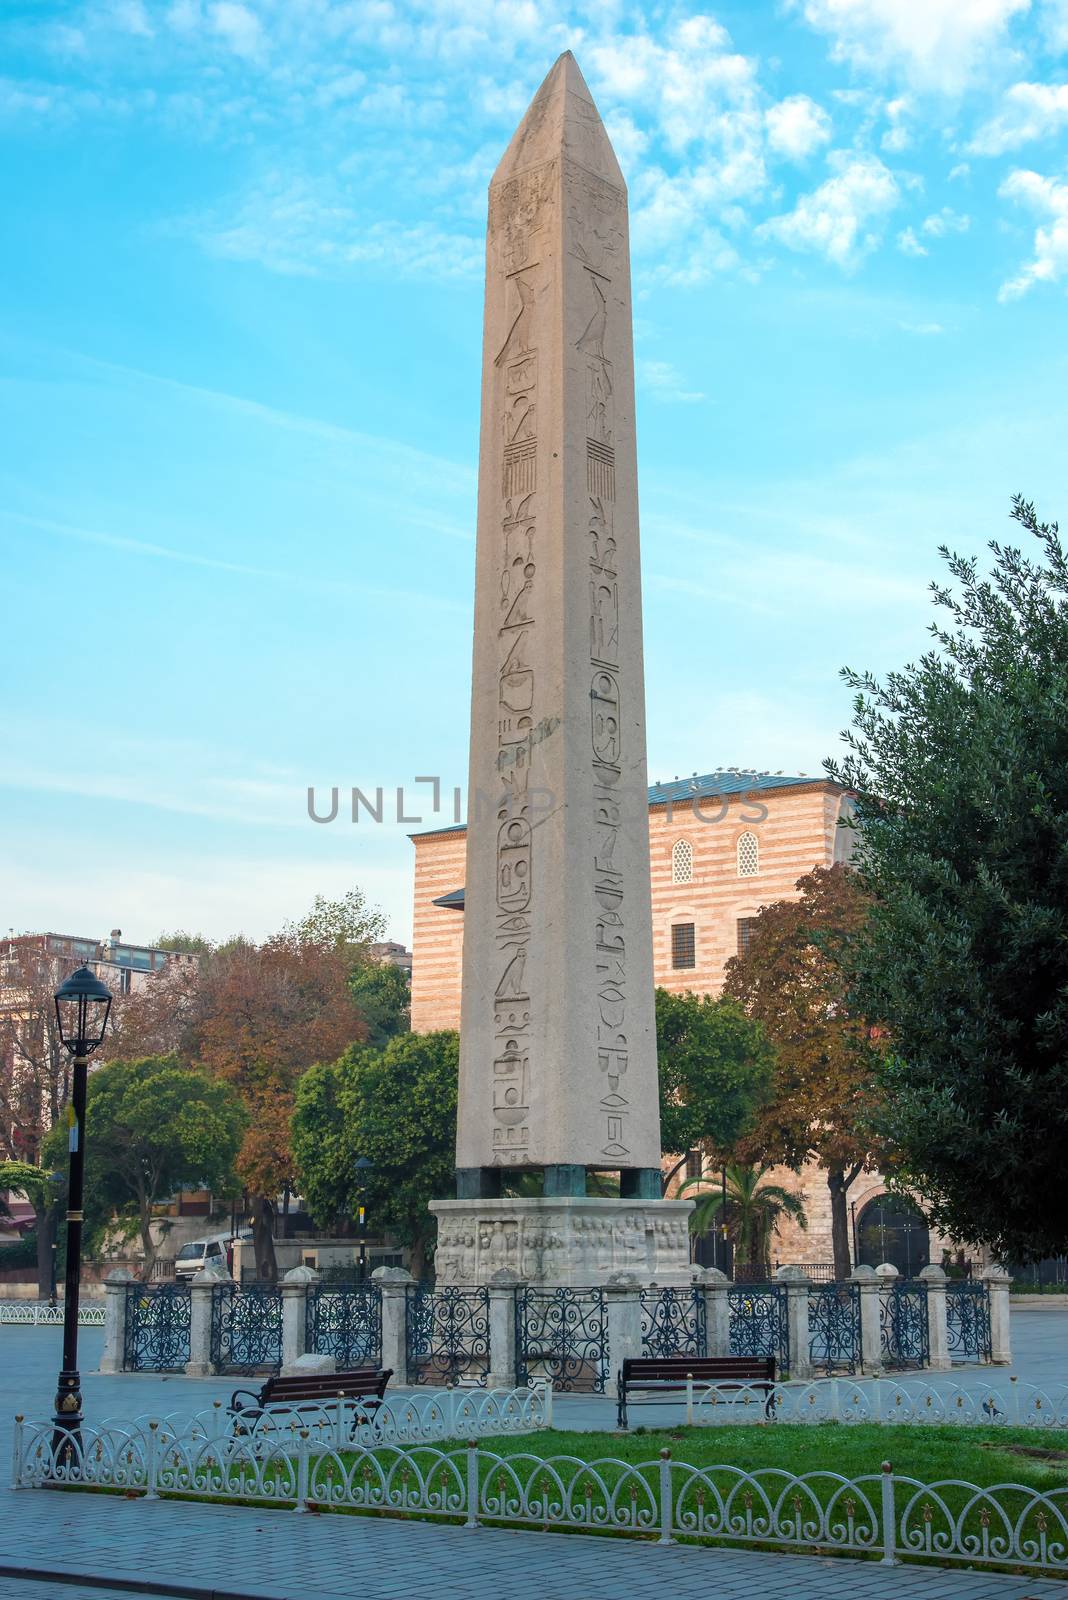 The egypt obelisk at the Hippodrome in Istanbul